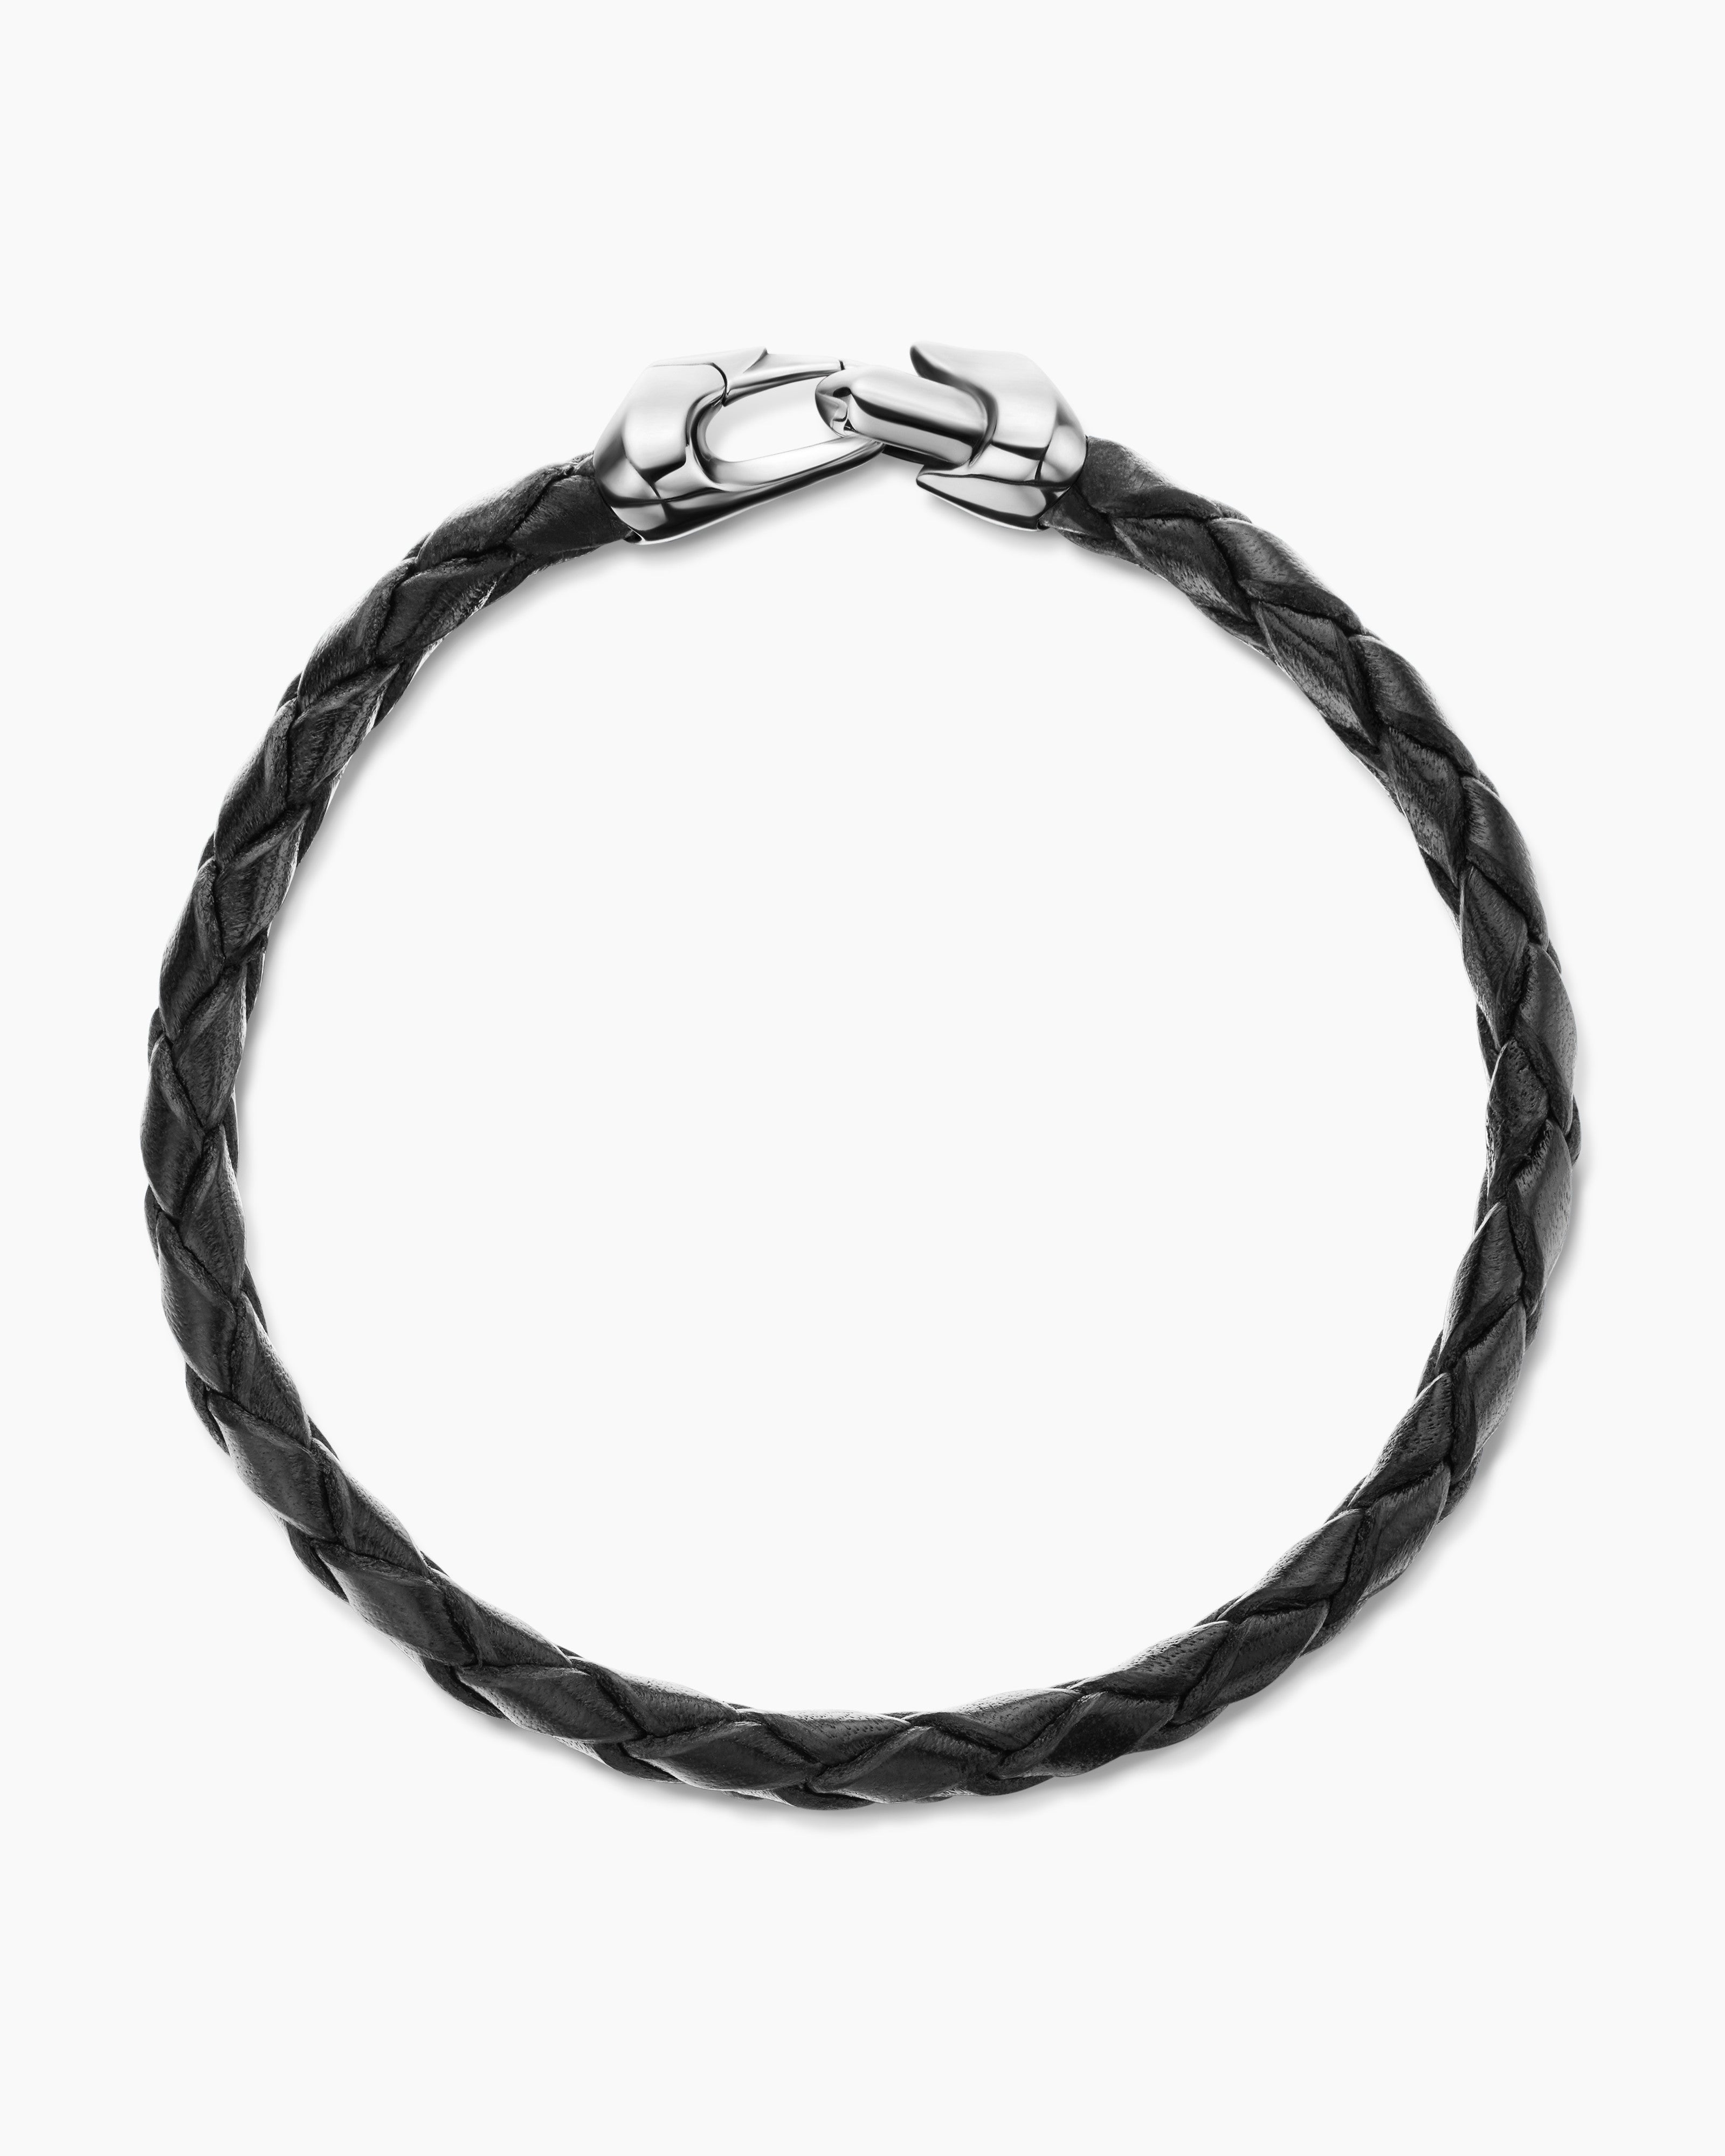 DAVID YURMAN Armory Black Leather Bracelet